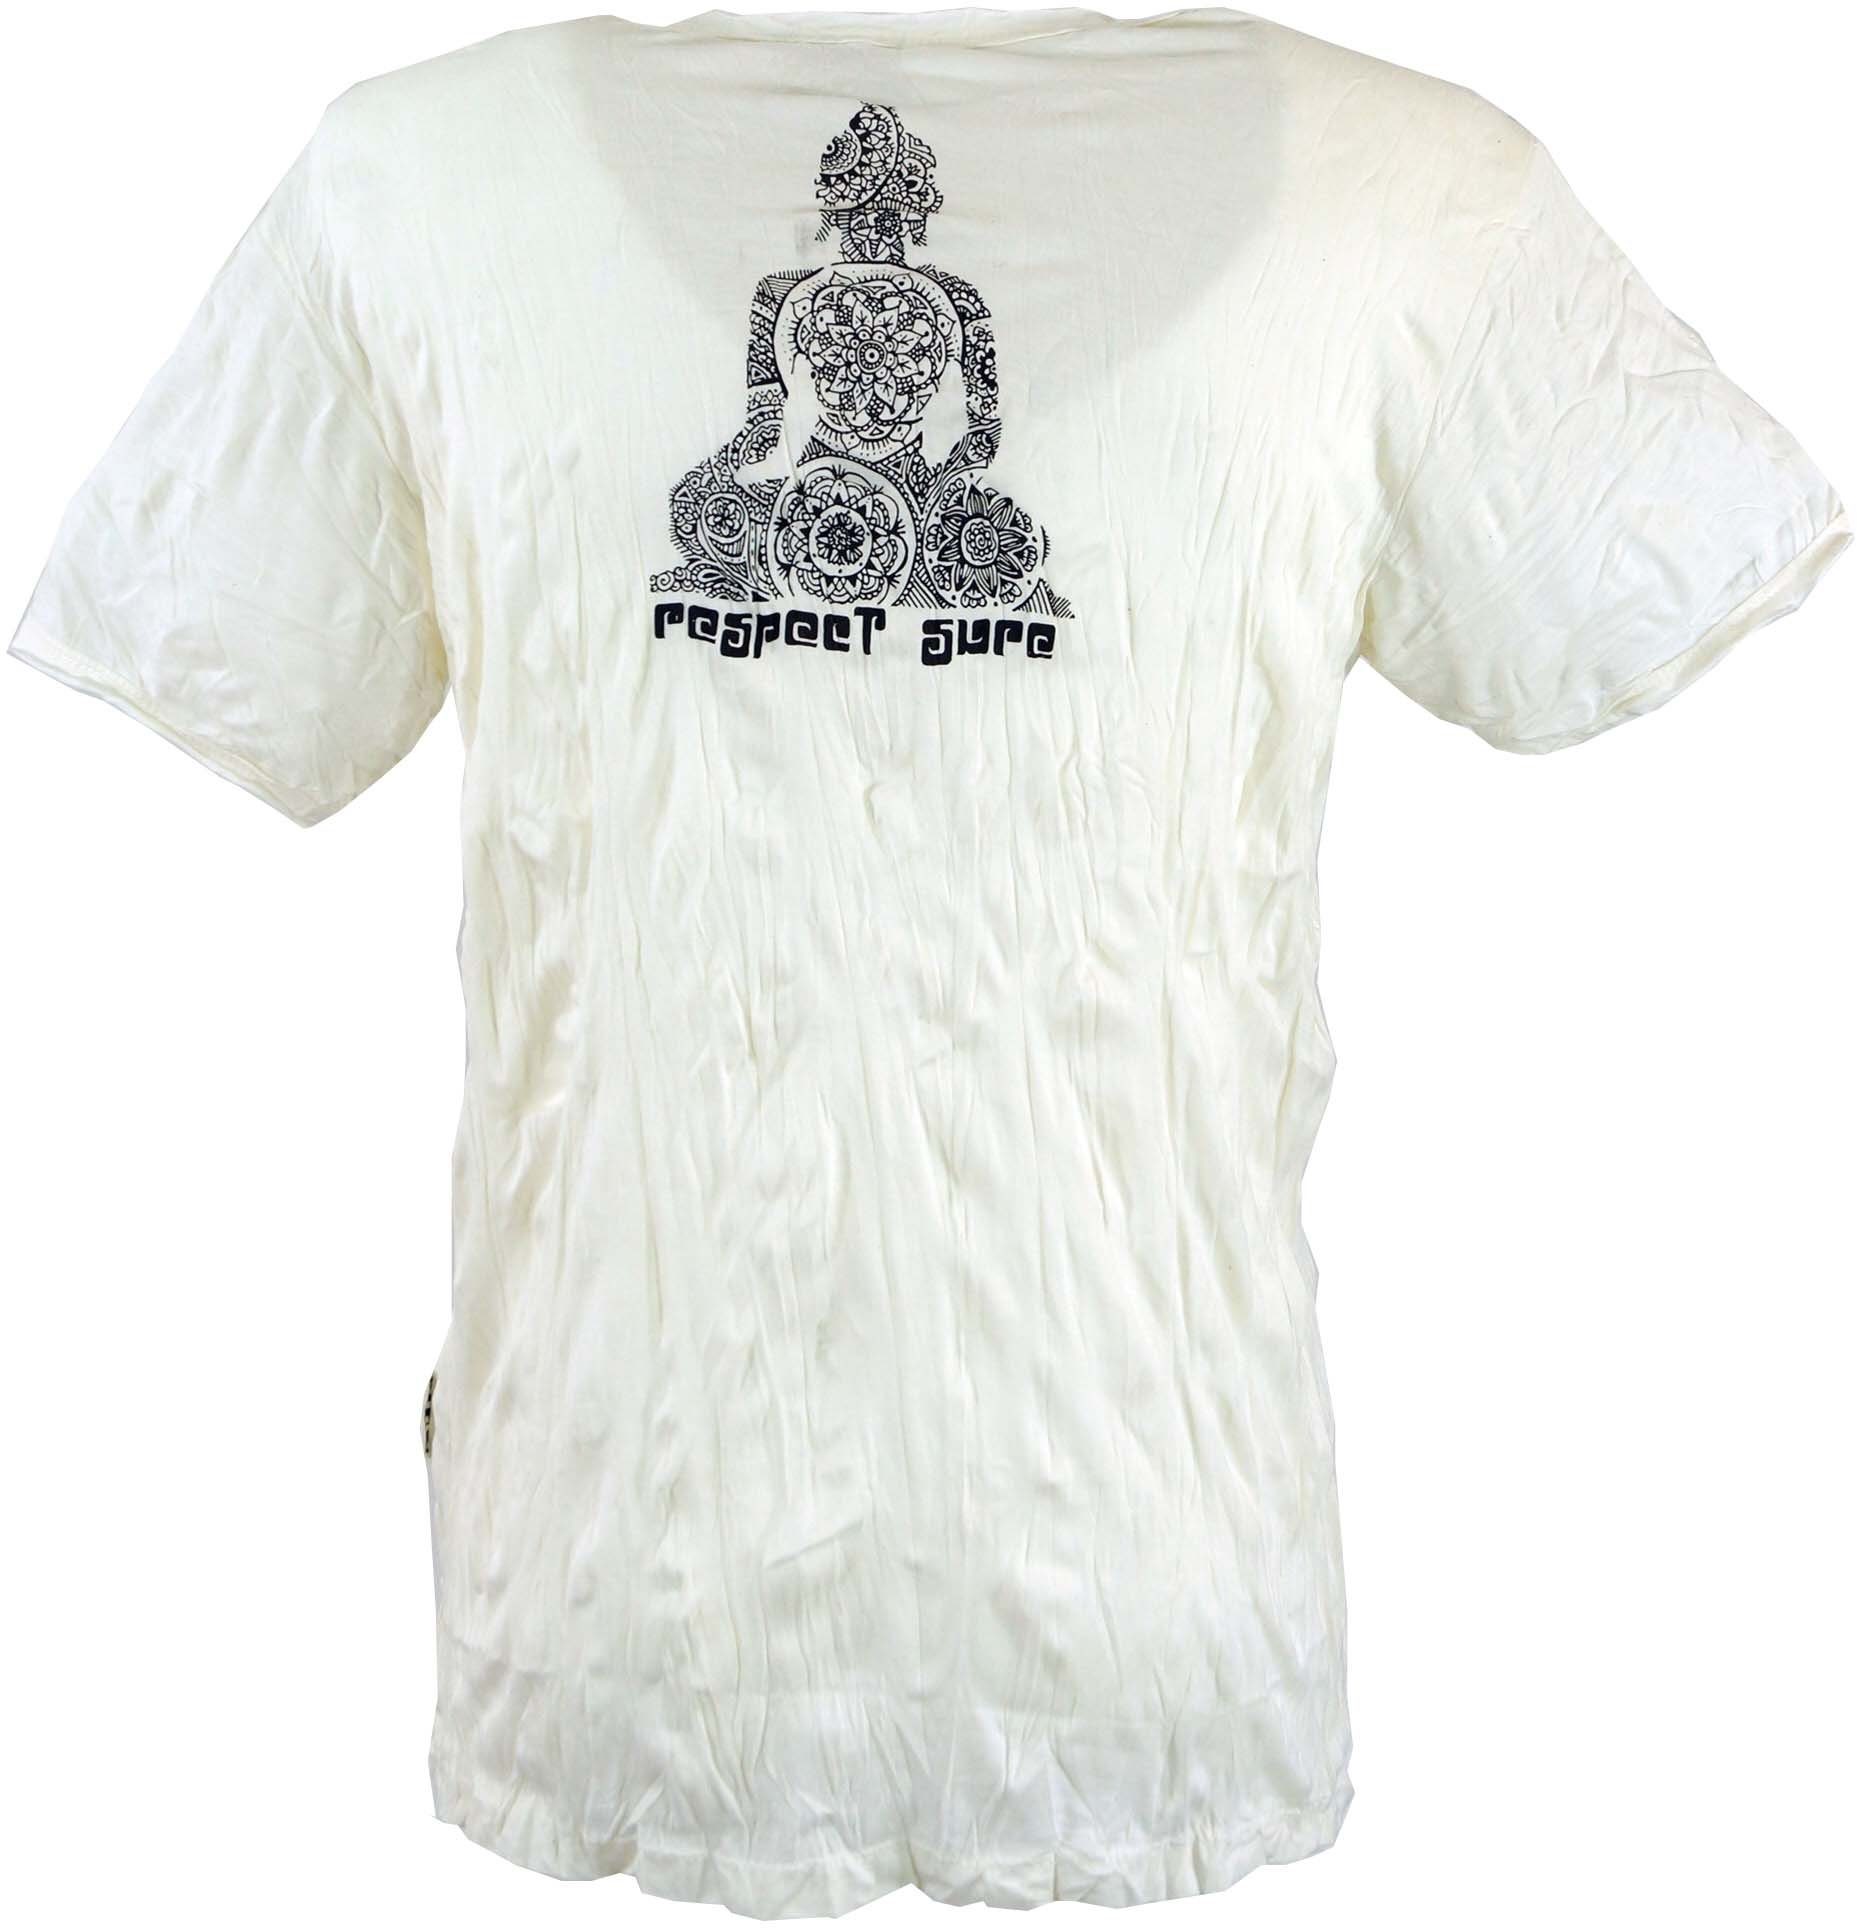 Bekleidung T-Shirt - weiß T-Shirt Goa Mandala Style, Guru-Shop Festival, Sure alternative Buddha